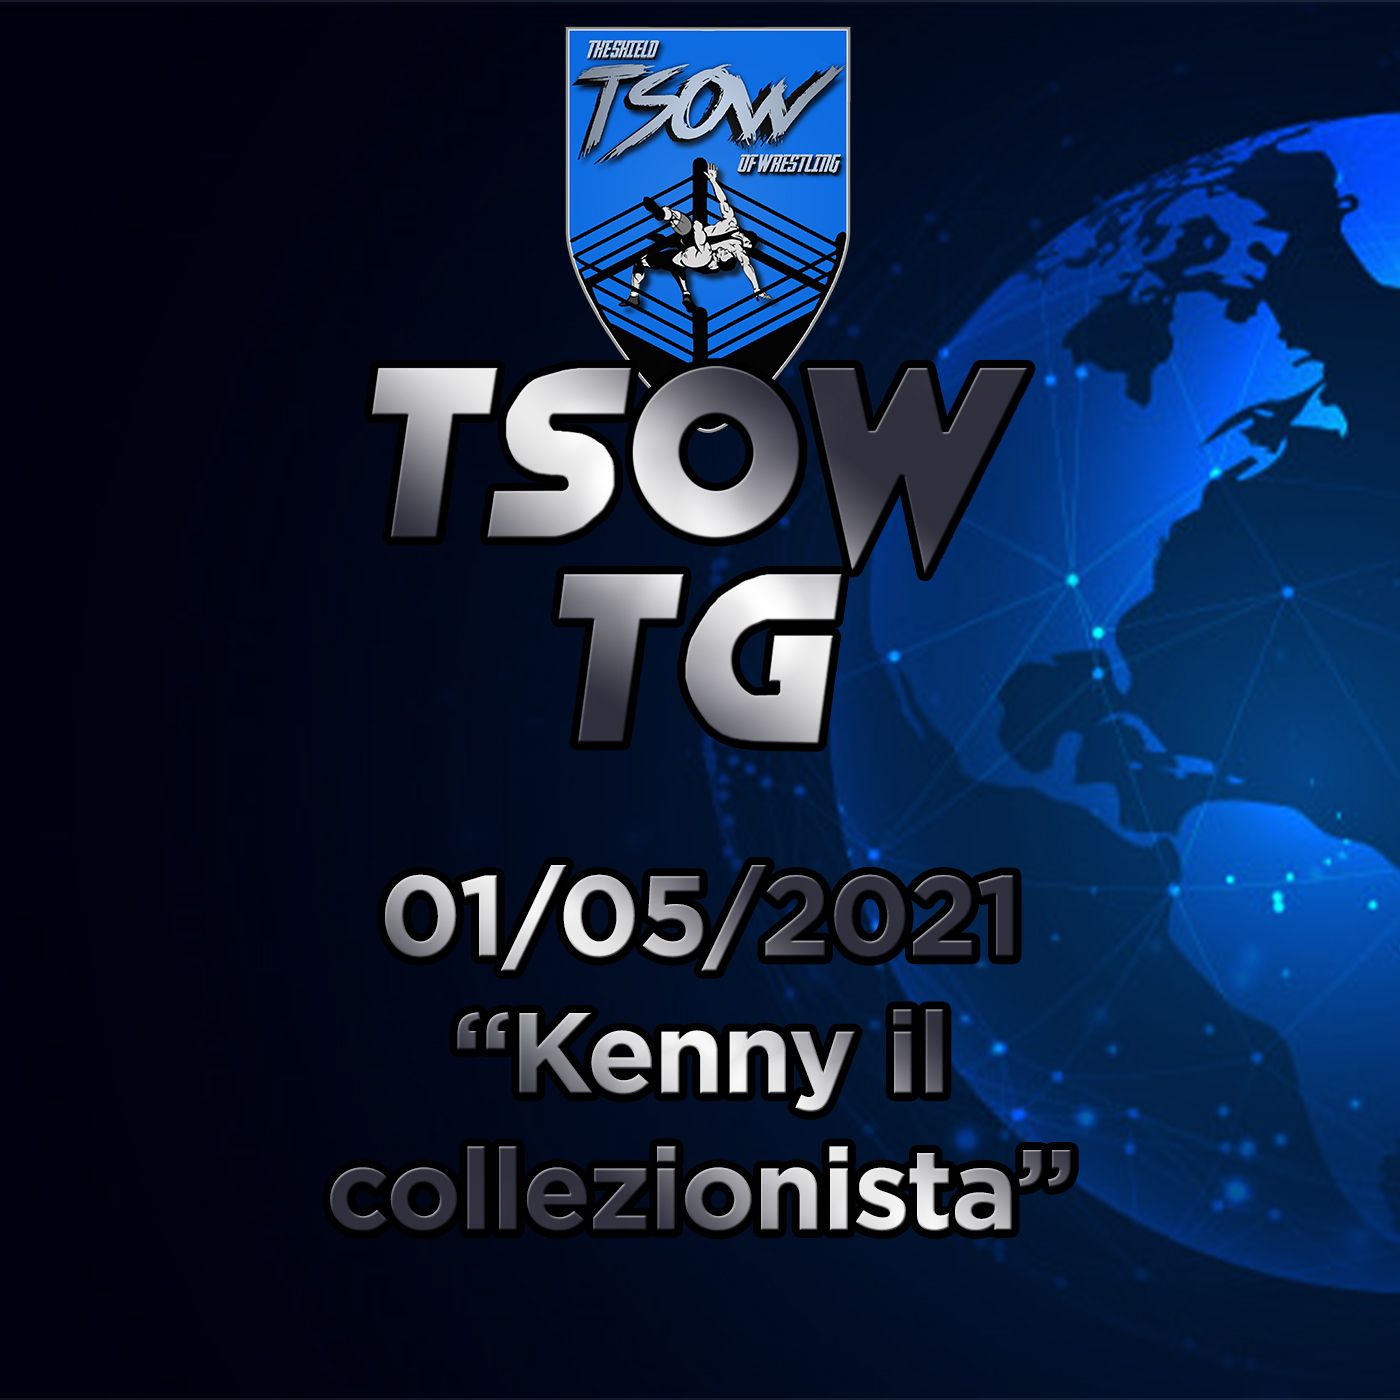 TSOW TG 01/05/2021: "Kenny Il Collezionista"